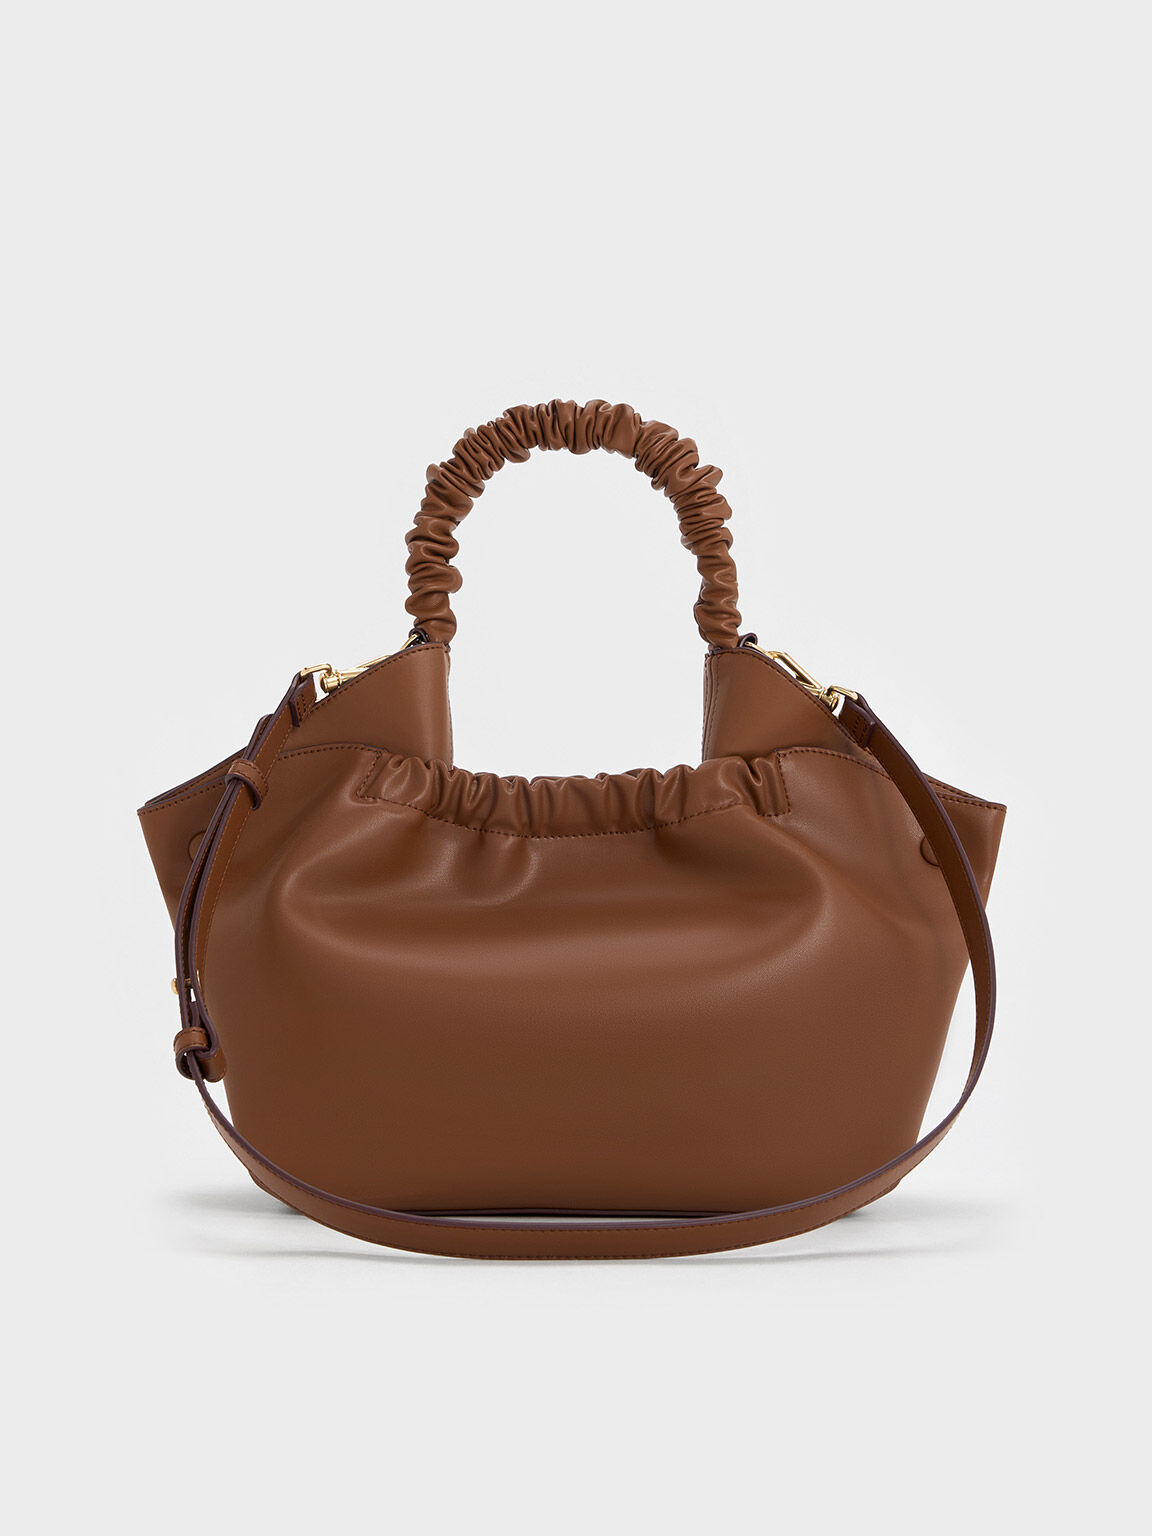 Eve Ruched-Handle Tote Bag, Chocolate, hi-res